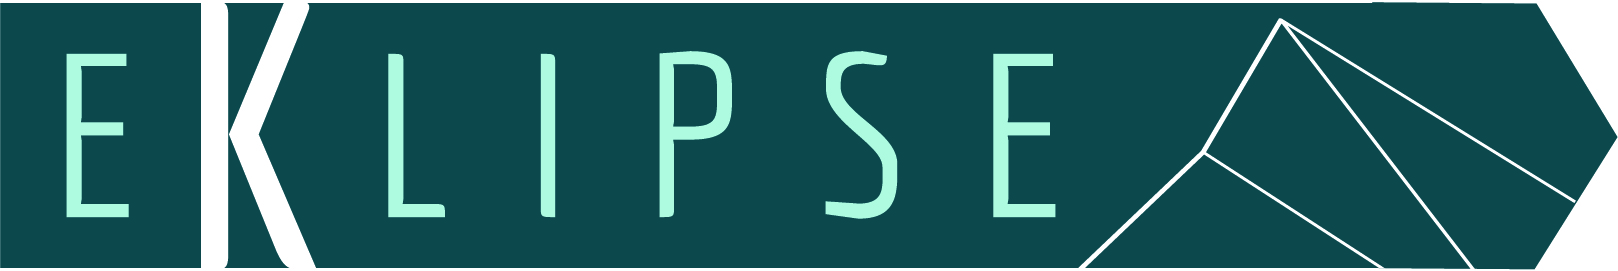 Eklipse logo